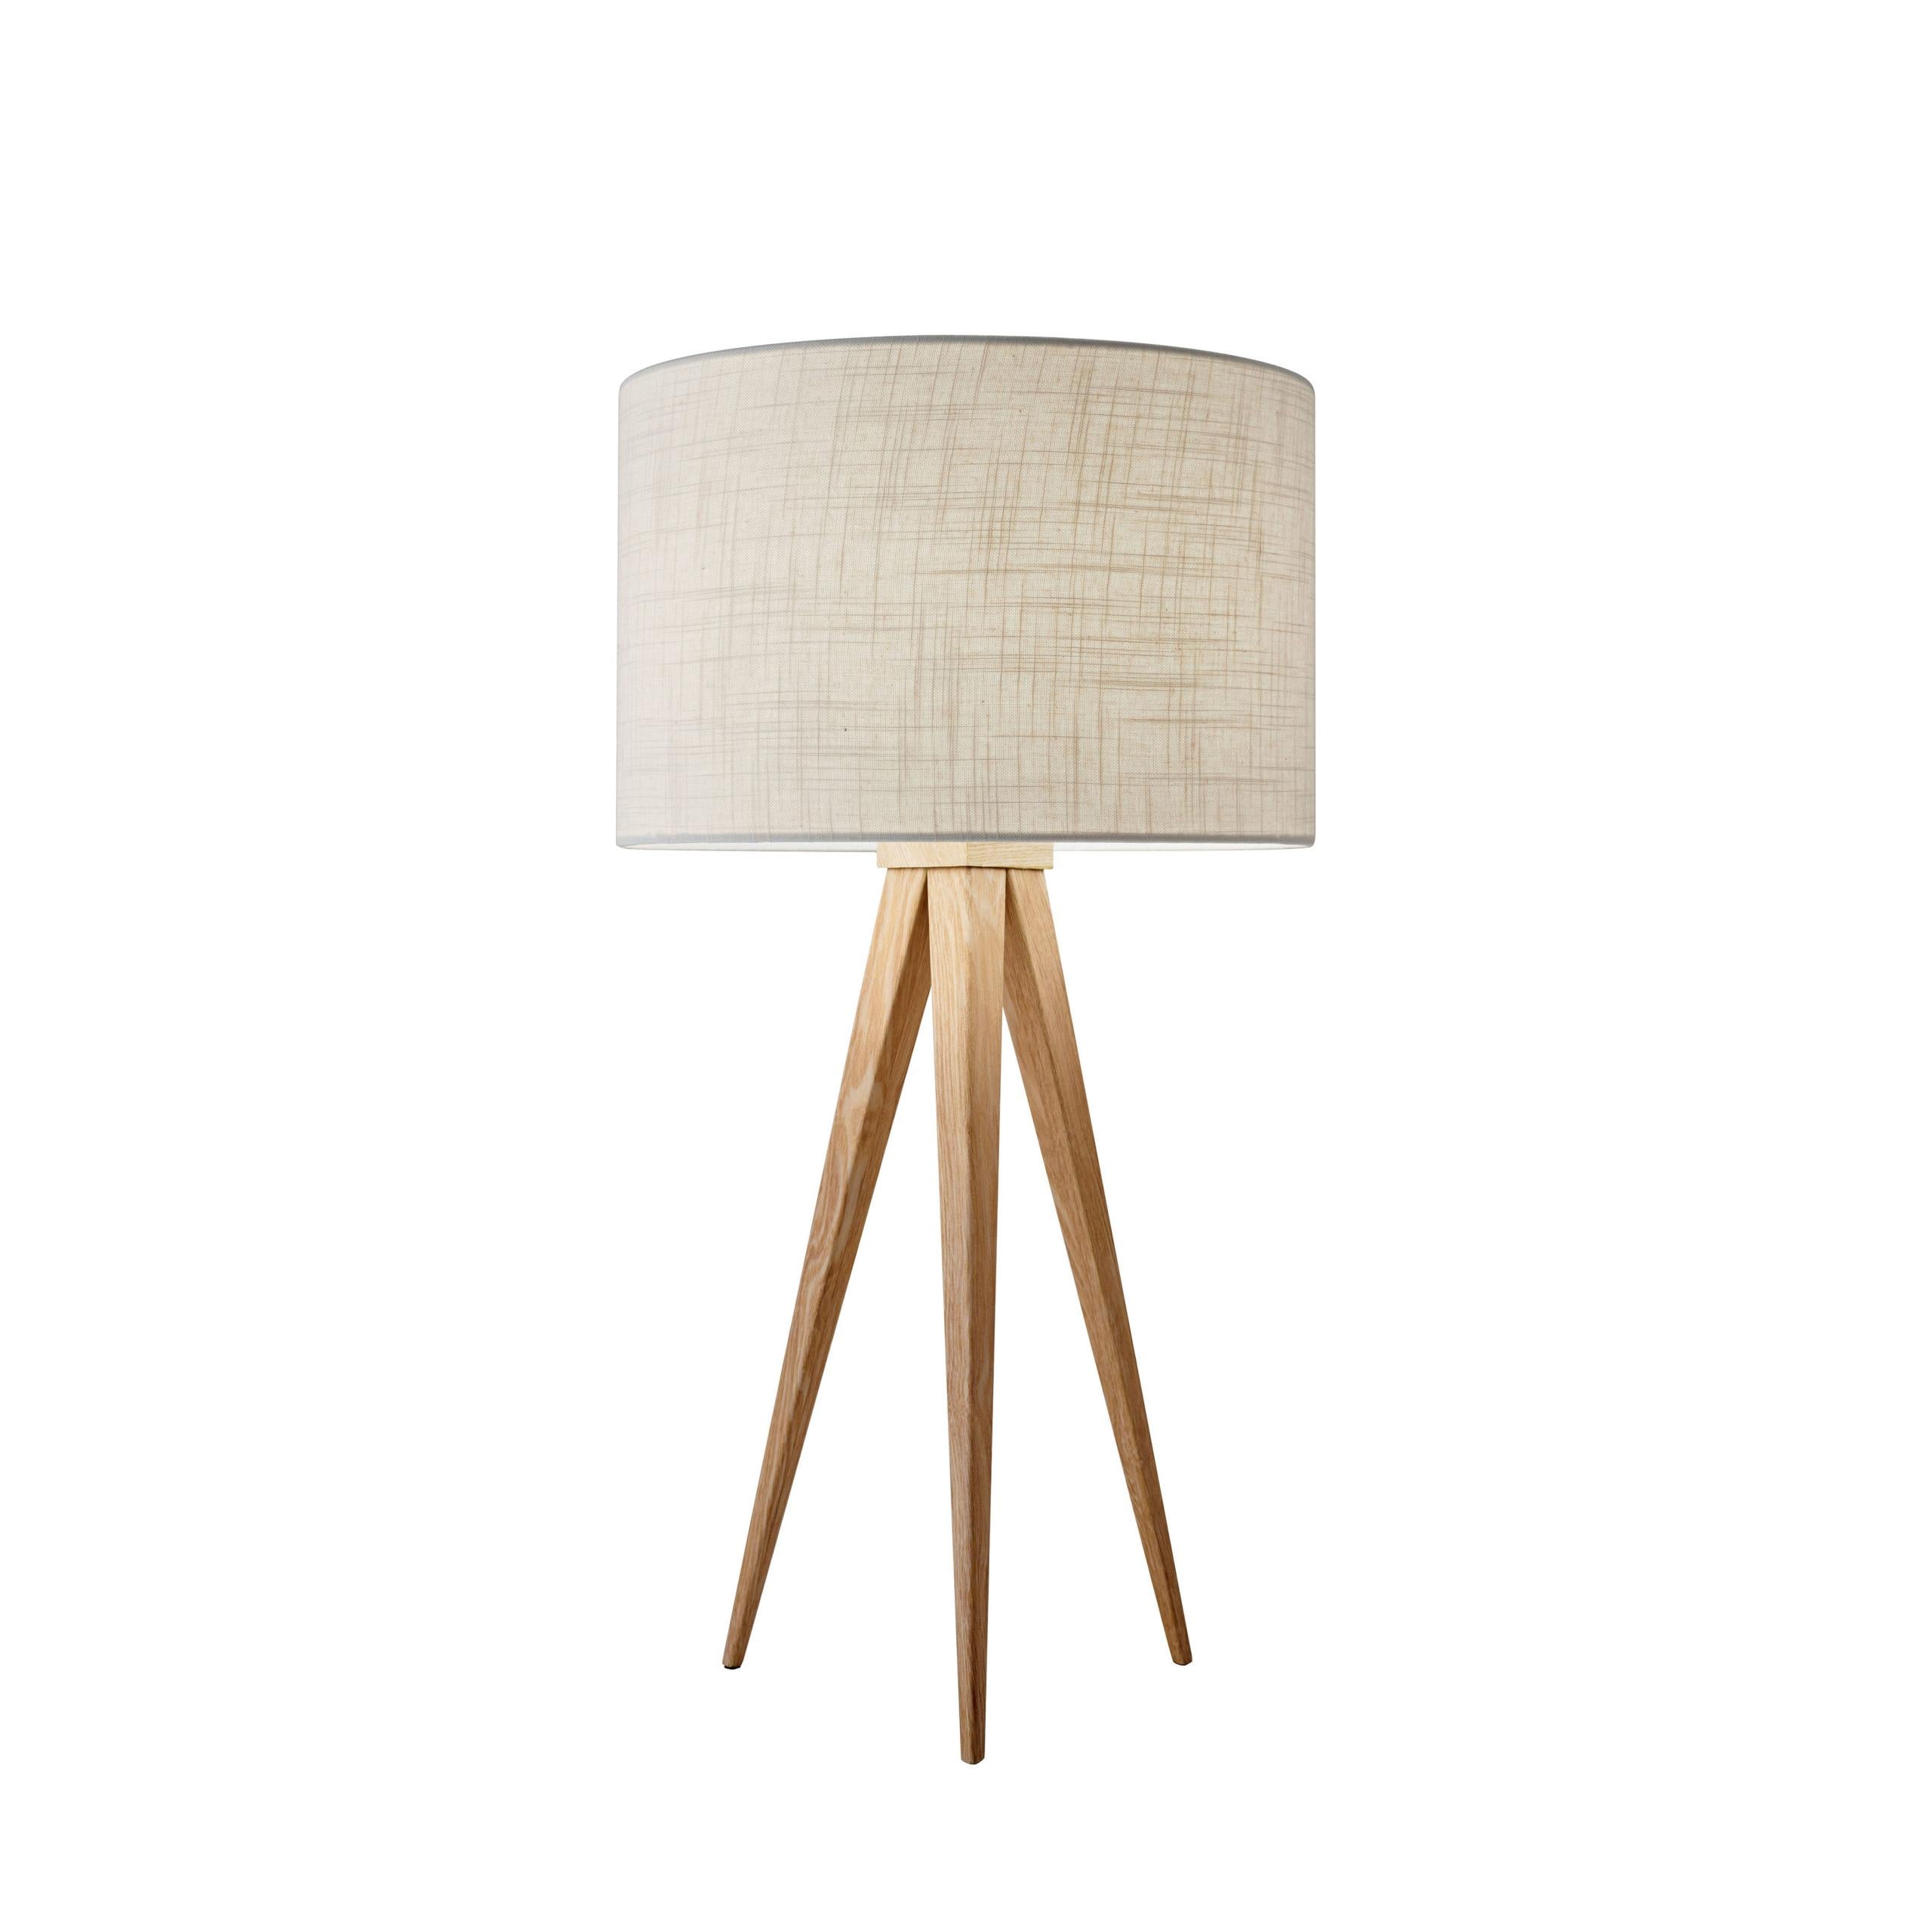 DIRECTOR Lampe sur table Bois - 6423-12 | ADESSO